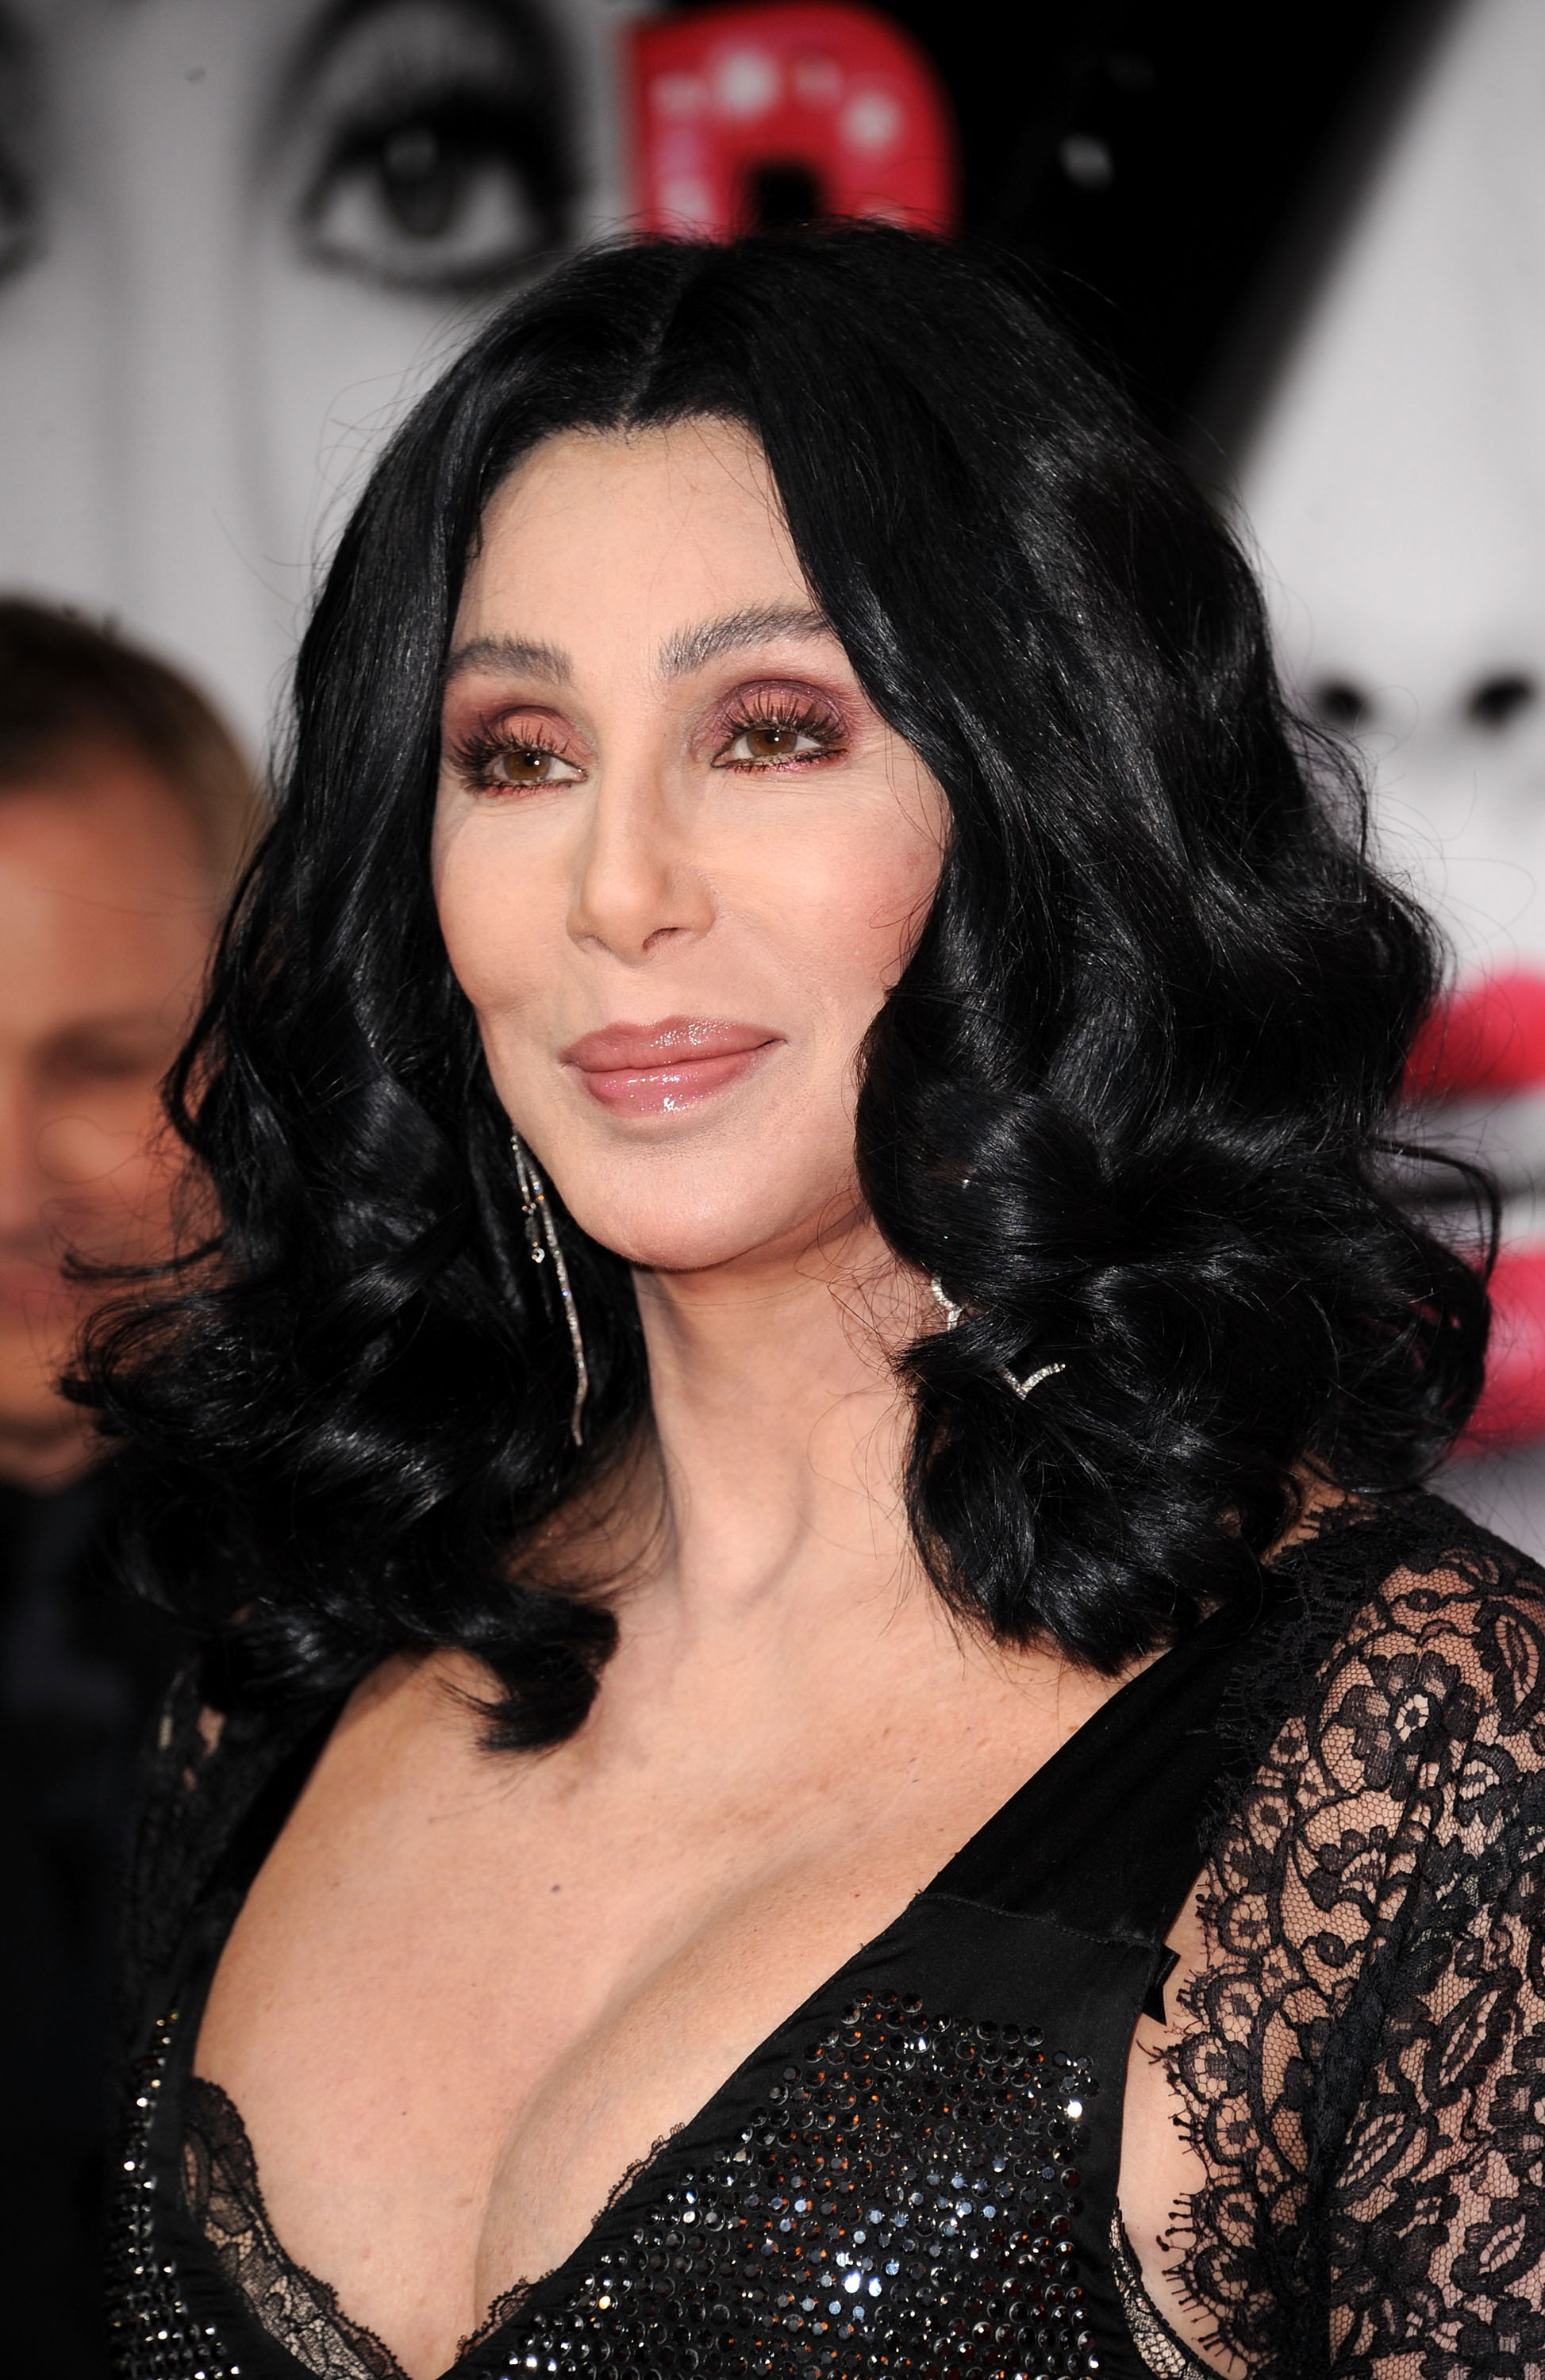 Cher in Hollywood, Kalifornien am 15. November 2010 | Quelle: Getty Images